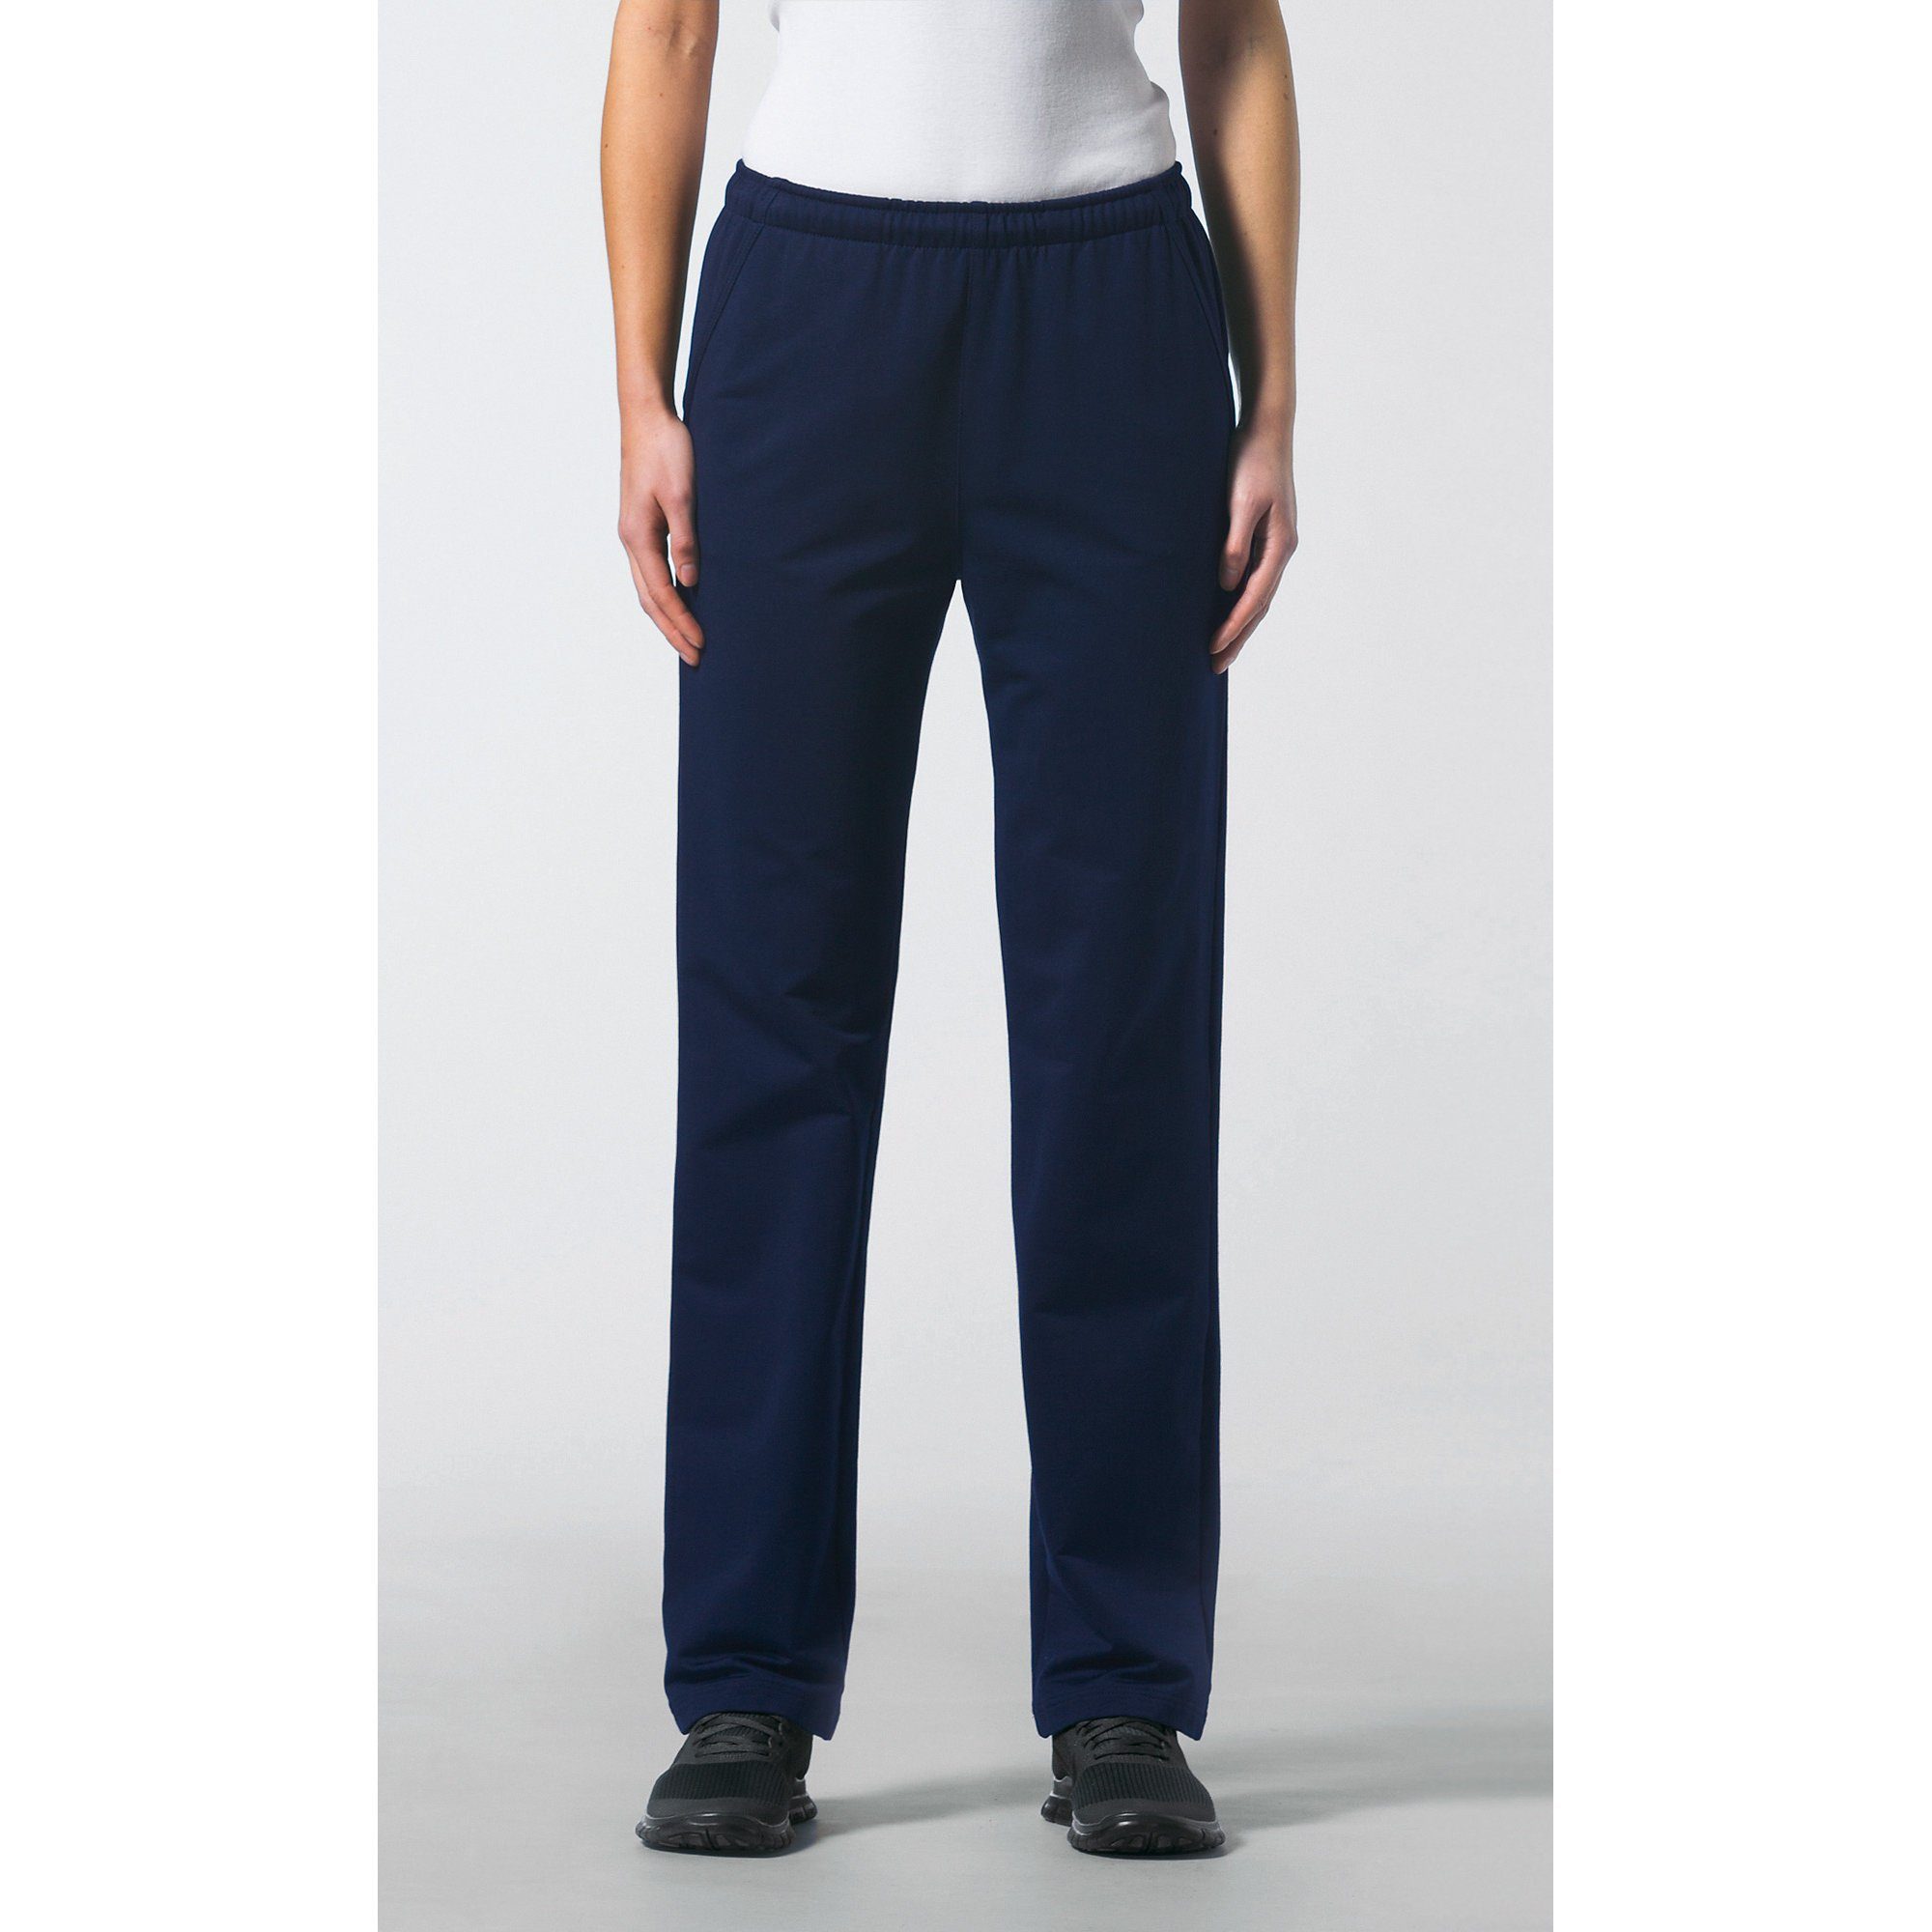 Jogginghose "PISAW", Damen-Freizeithose marine SCHNEIDER Uni Sportswear lang